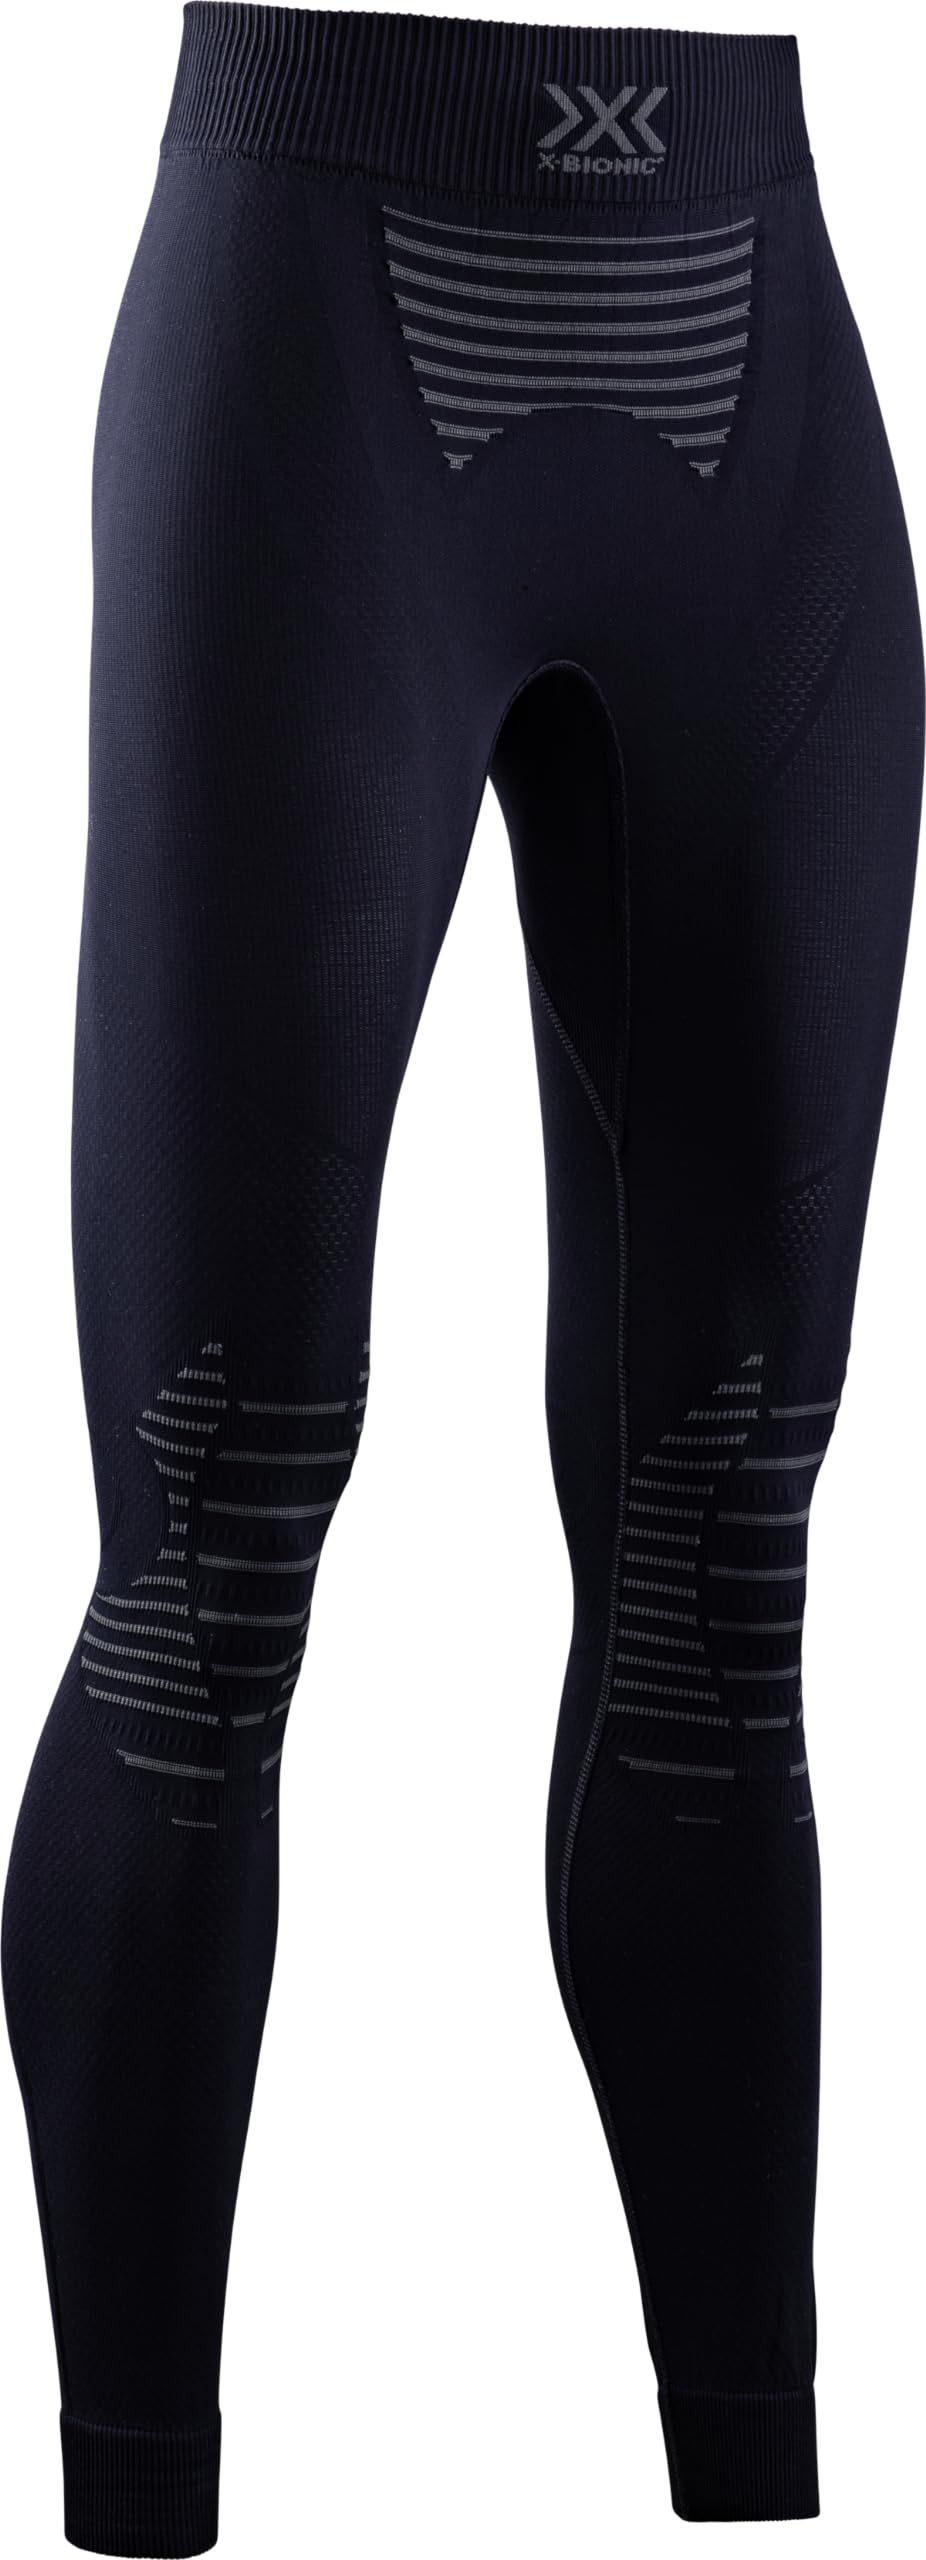 X-Bionic® Invent 4.0 Pantaloni Termici Leggins Termici Donna - Collant Invernali, S